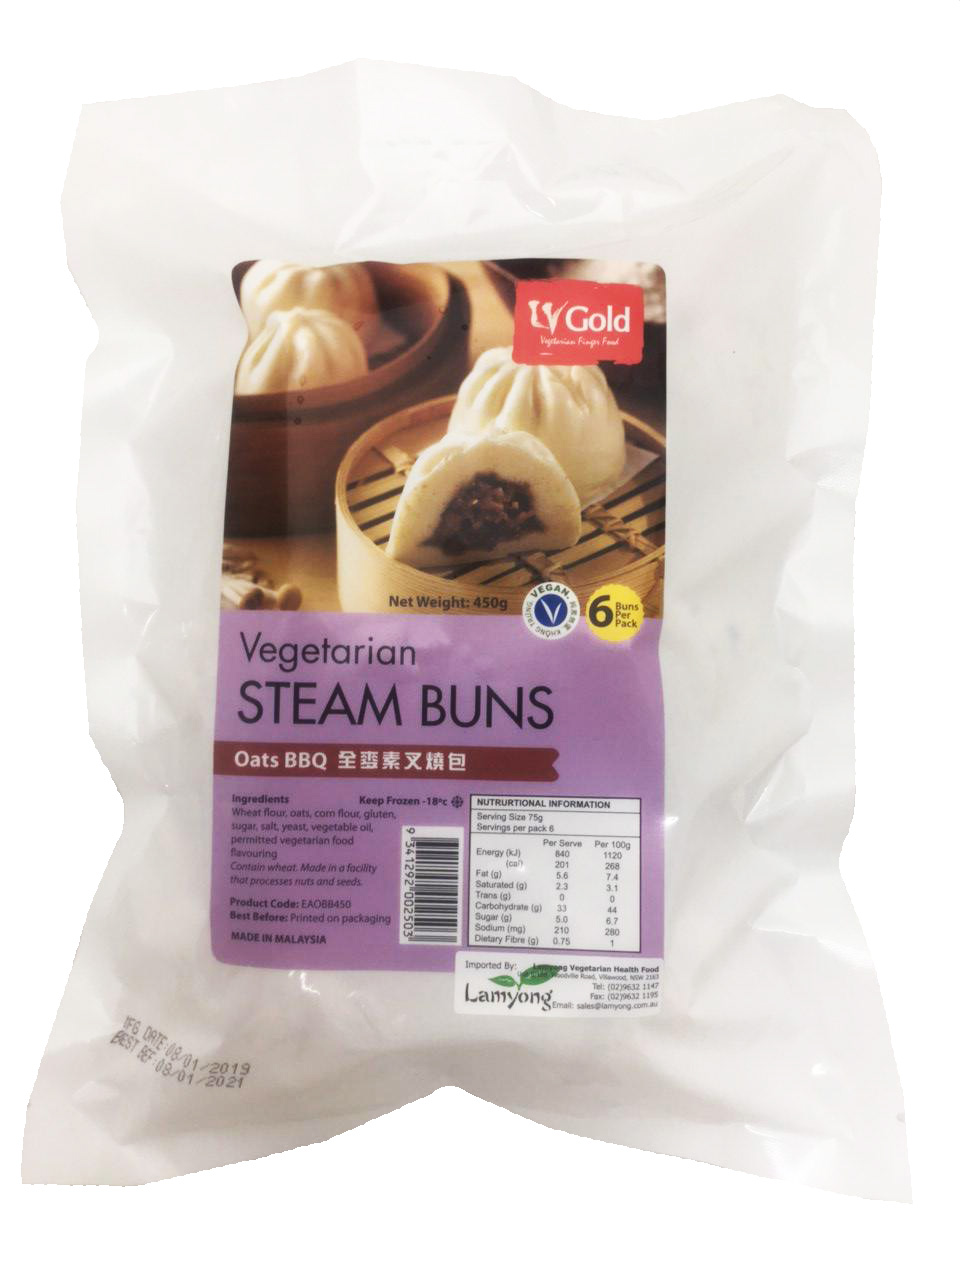 LV Gold Vegan BBQ Buns (Oats Skin Pastry)6pcs